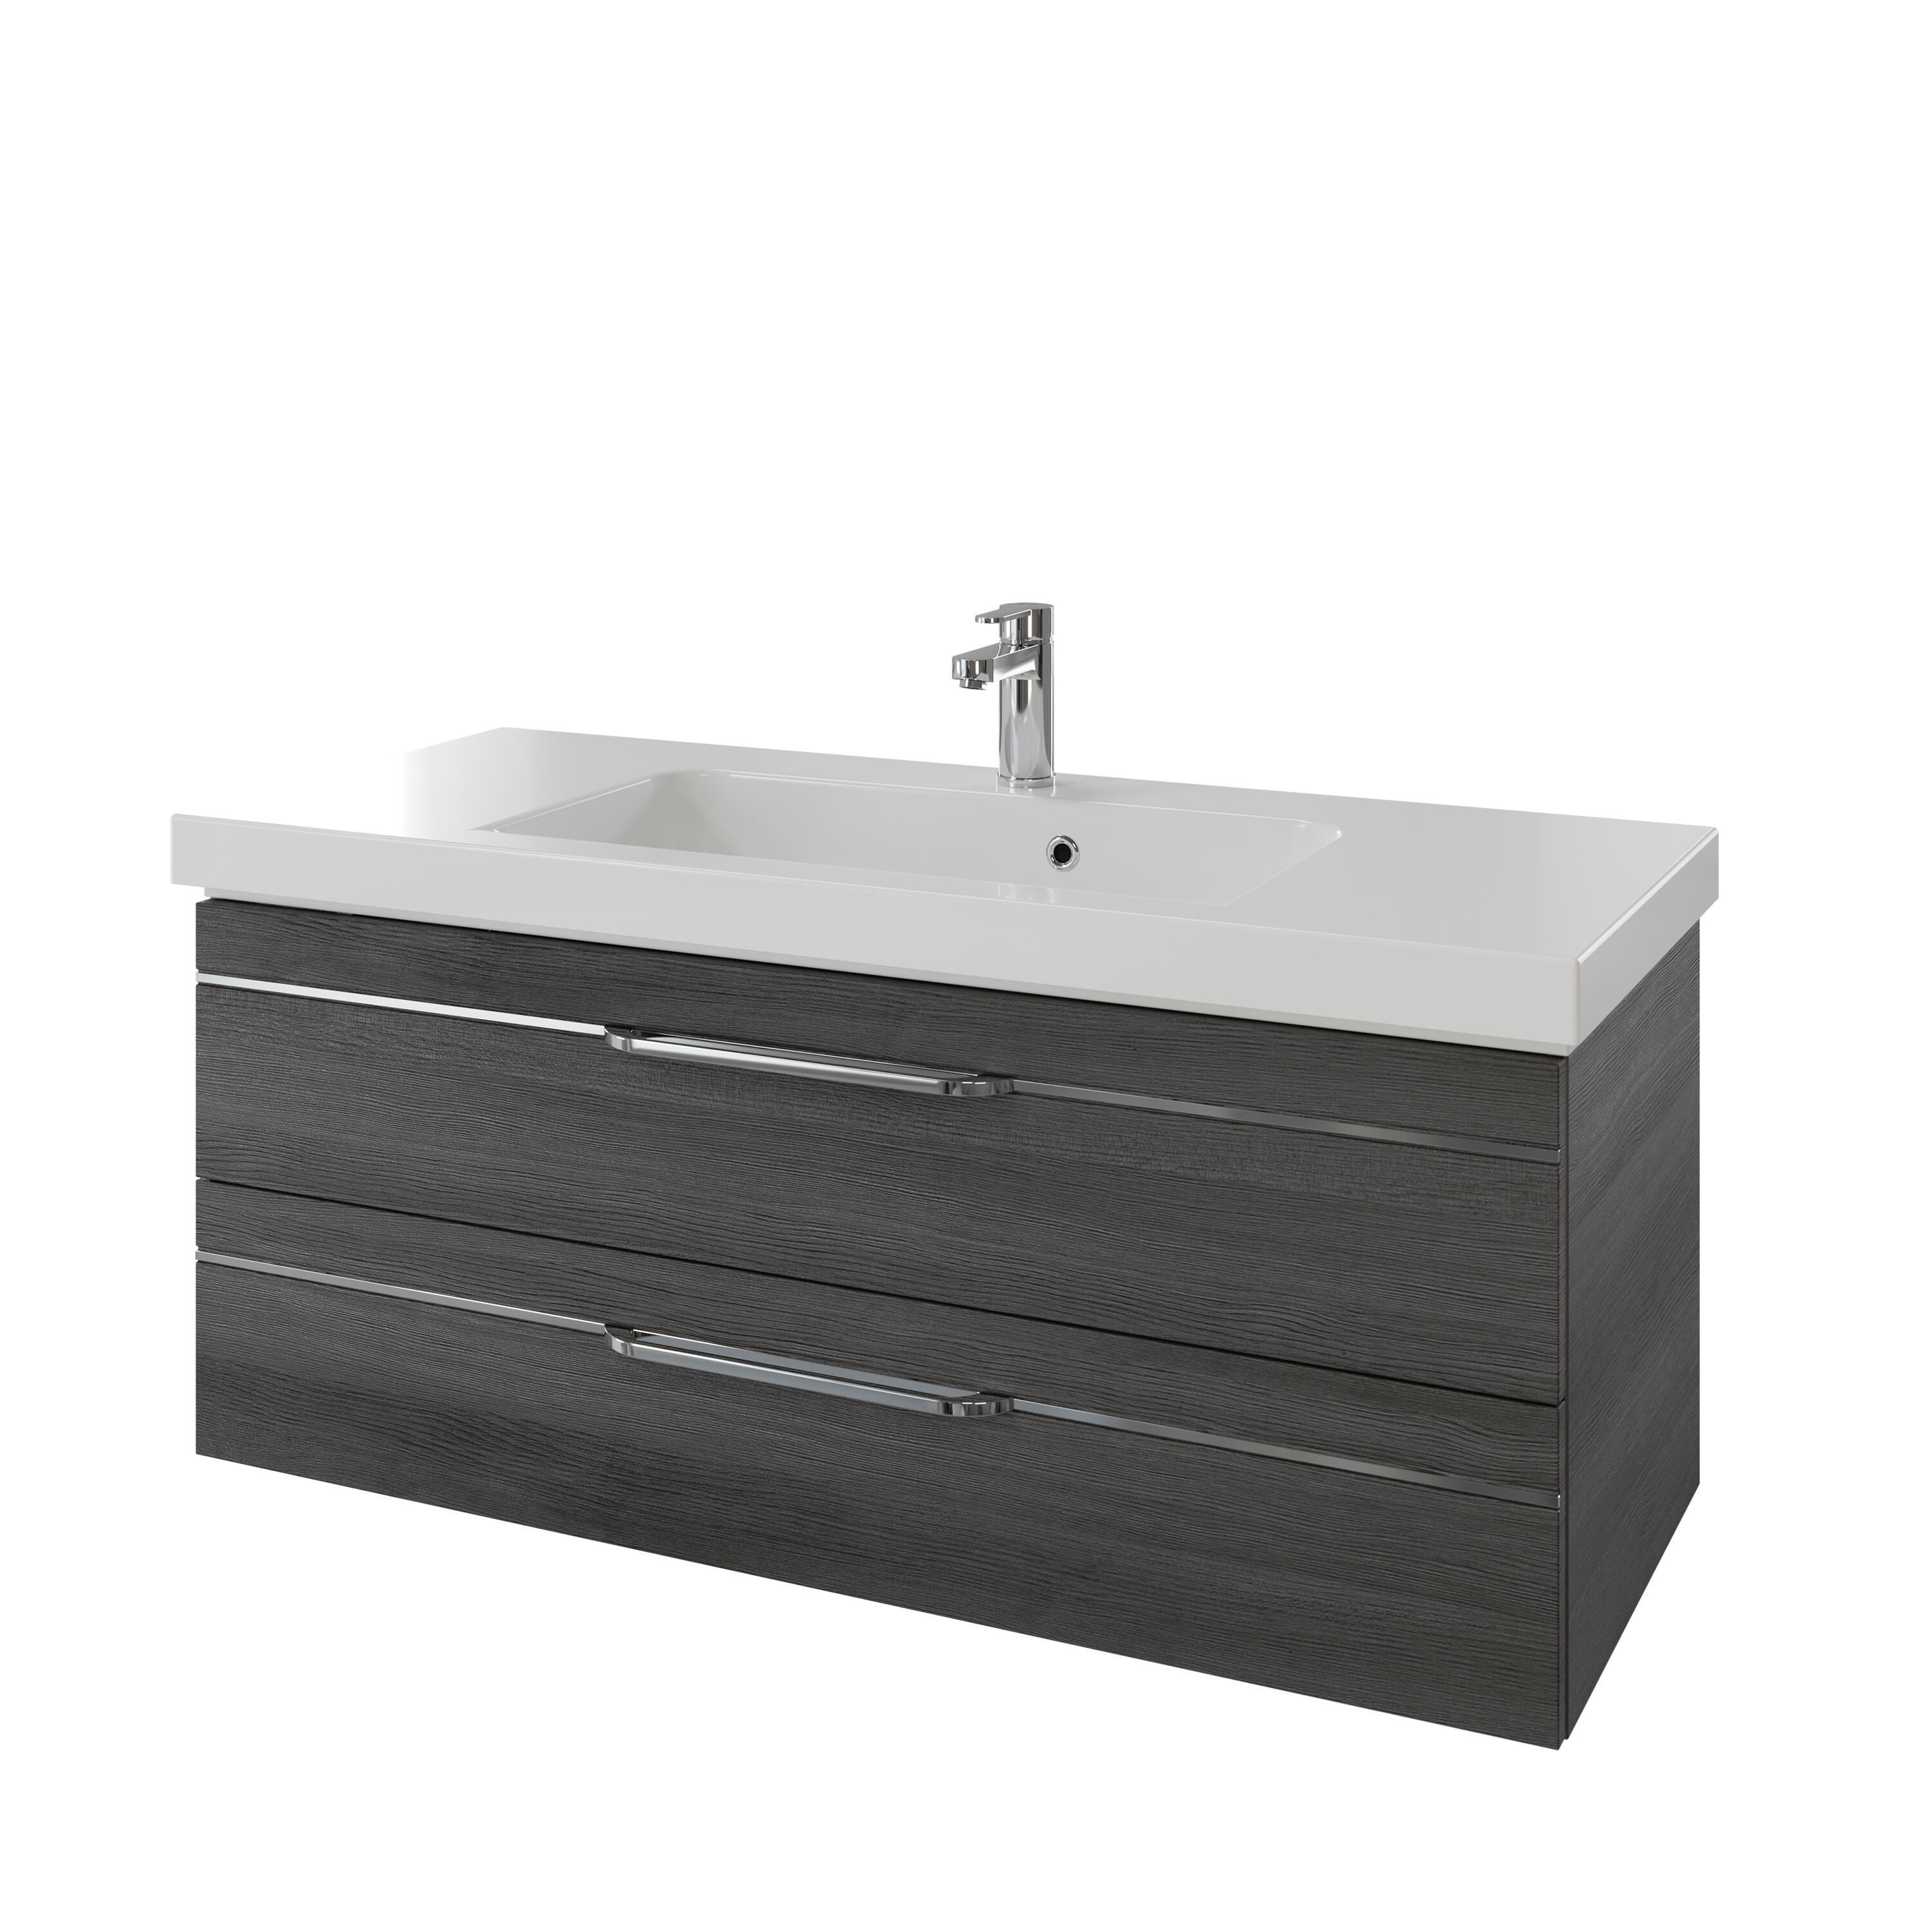 Mueble de baño con lavabo balto grafito brillante 120x49 cm